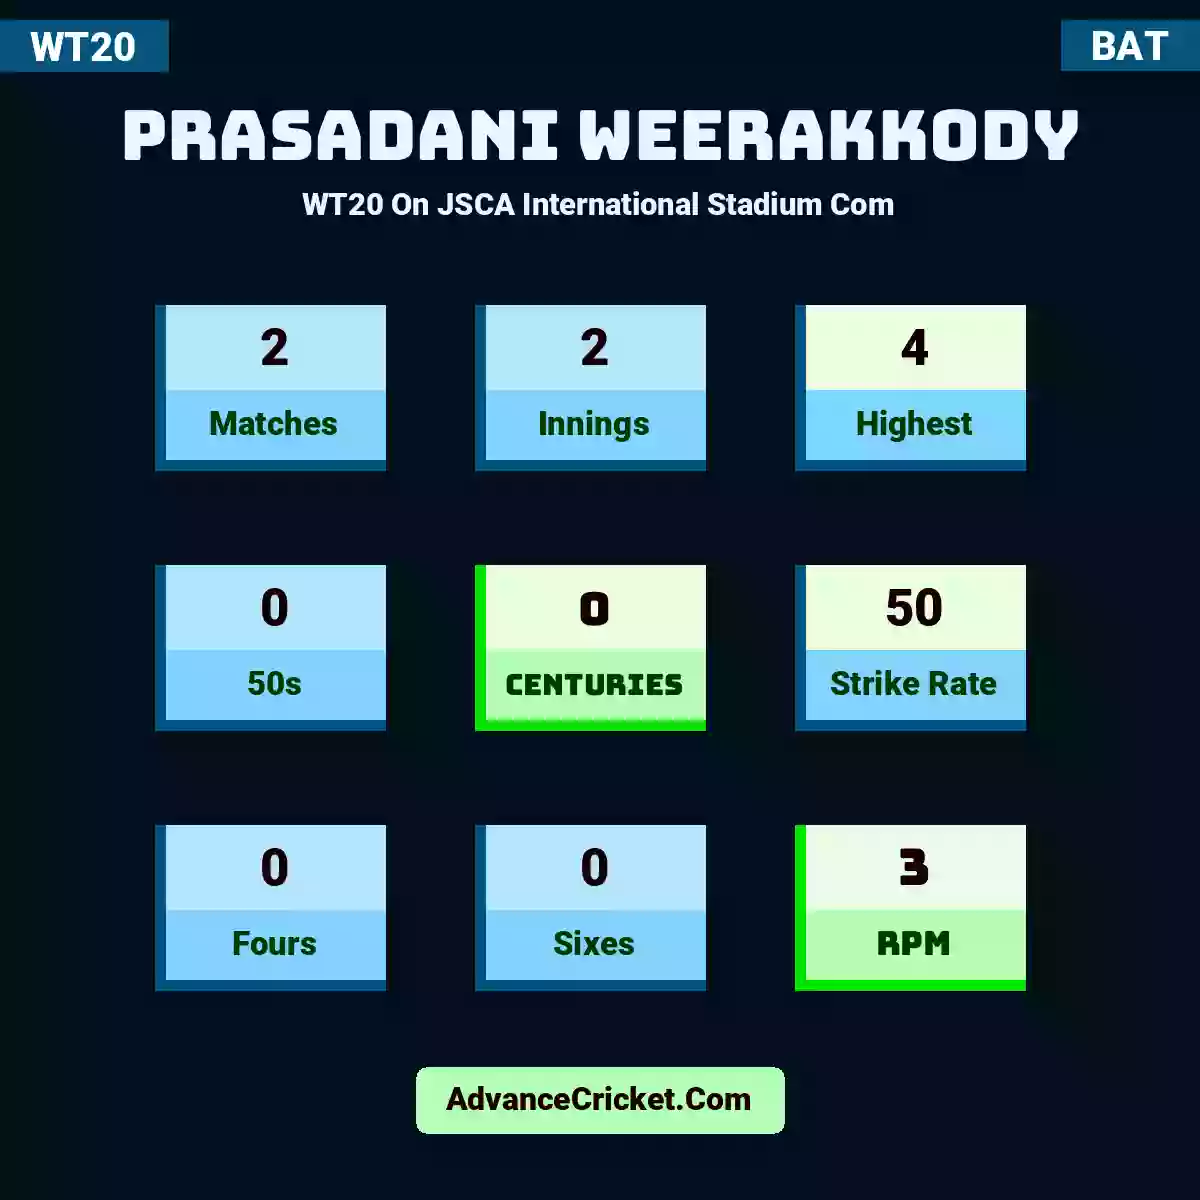 Prasadani Weerakkody WT20  On JSCA International Stadium Com, Prasadani Weerakkody played 2 matches, scored 4 runs as highest, 0 half-centuries, and 0 centuries, with a strike rate of 50. P.Weerakkody hit 0 fours and 0 sixes, with an RPM of 3.